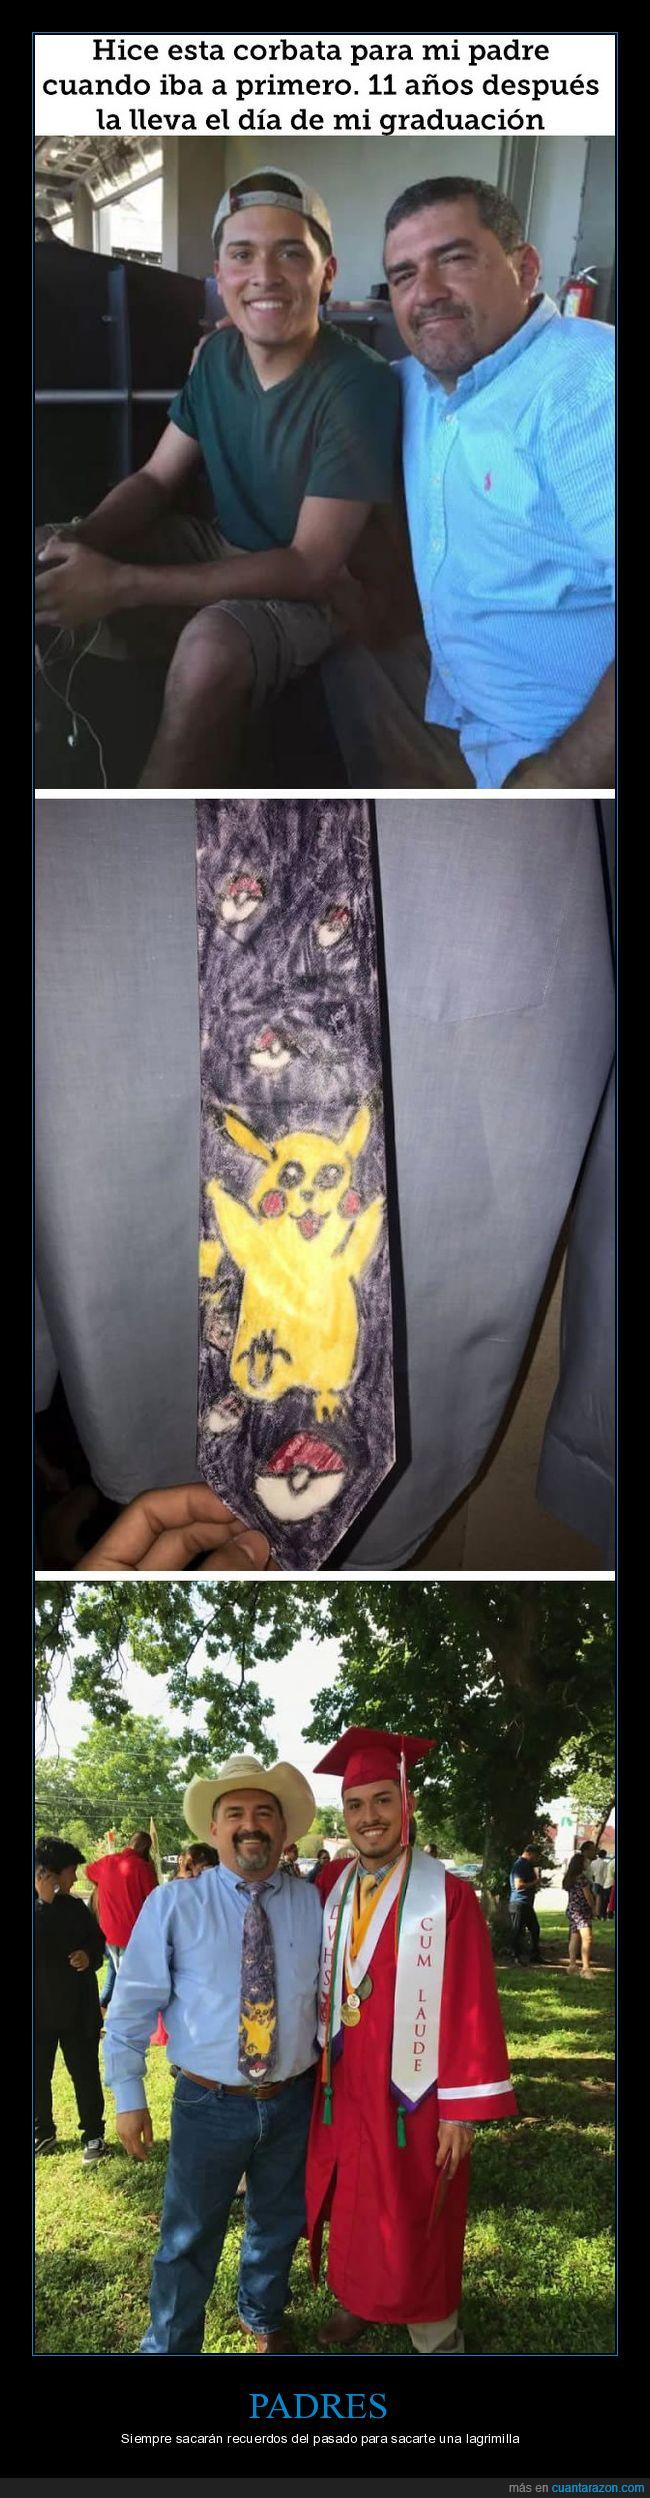 padre,corbata,pikachu,graduación